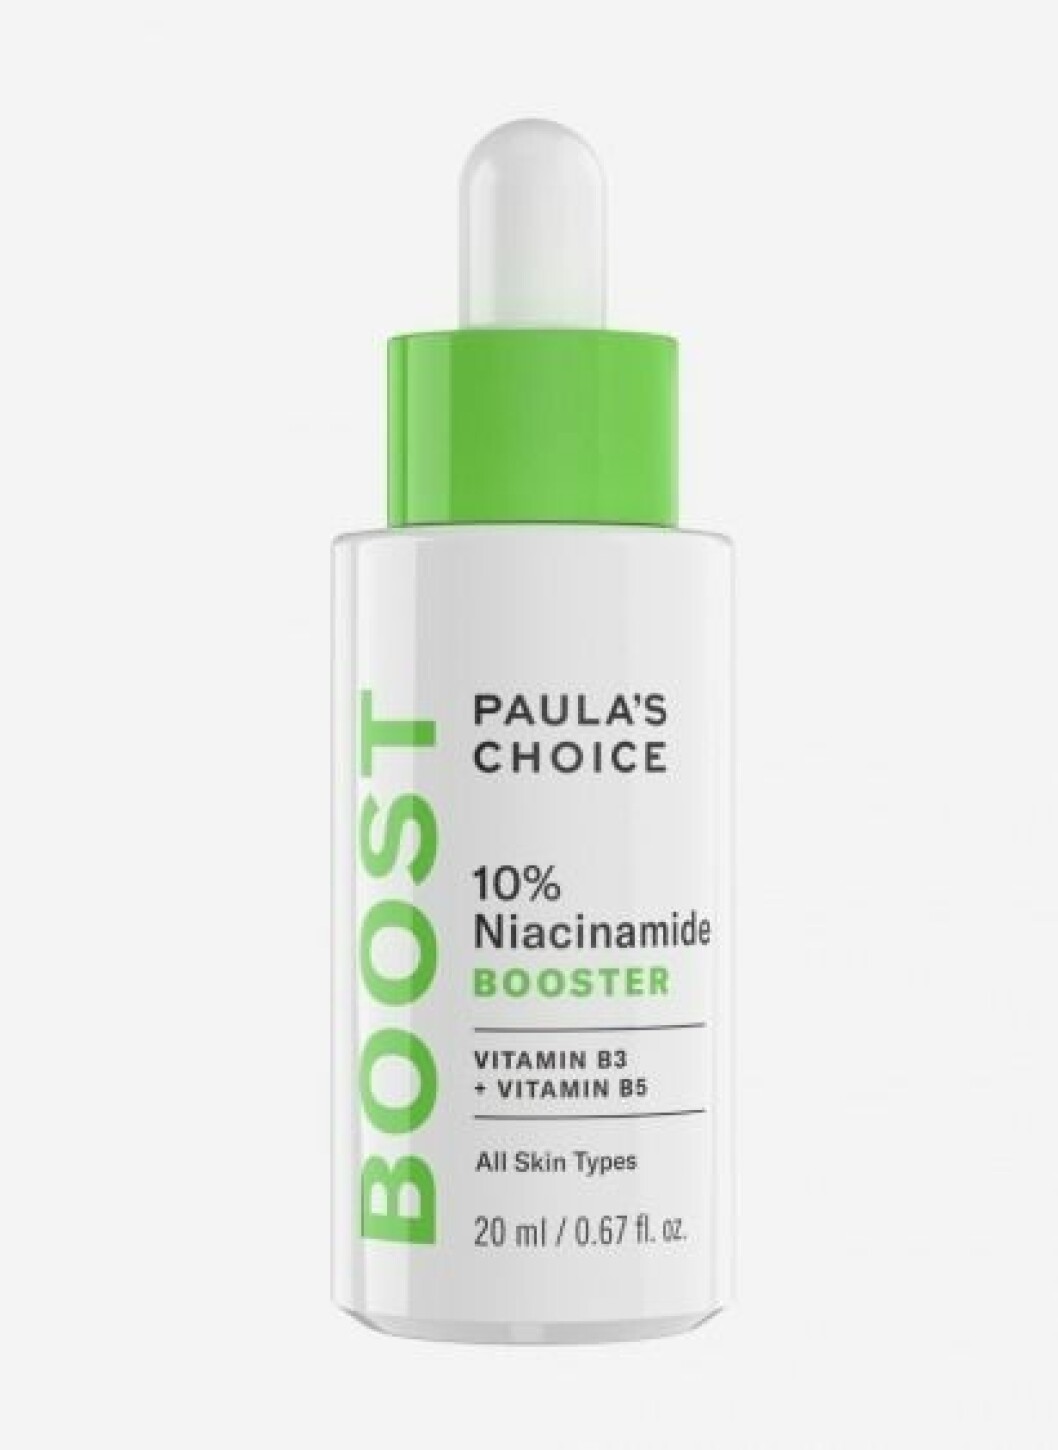 Paulas Choice 10% Niacinamide booster